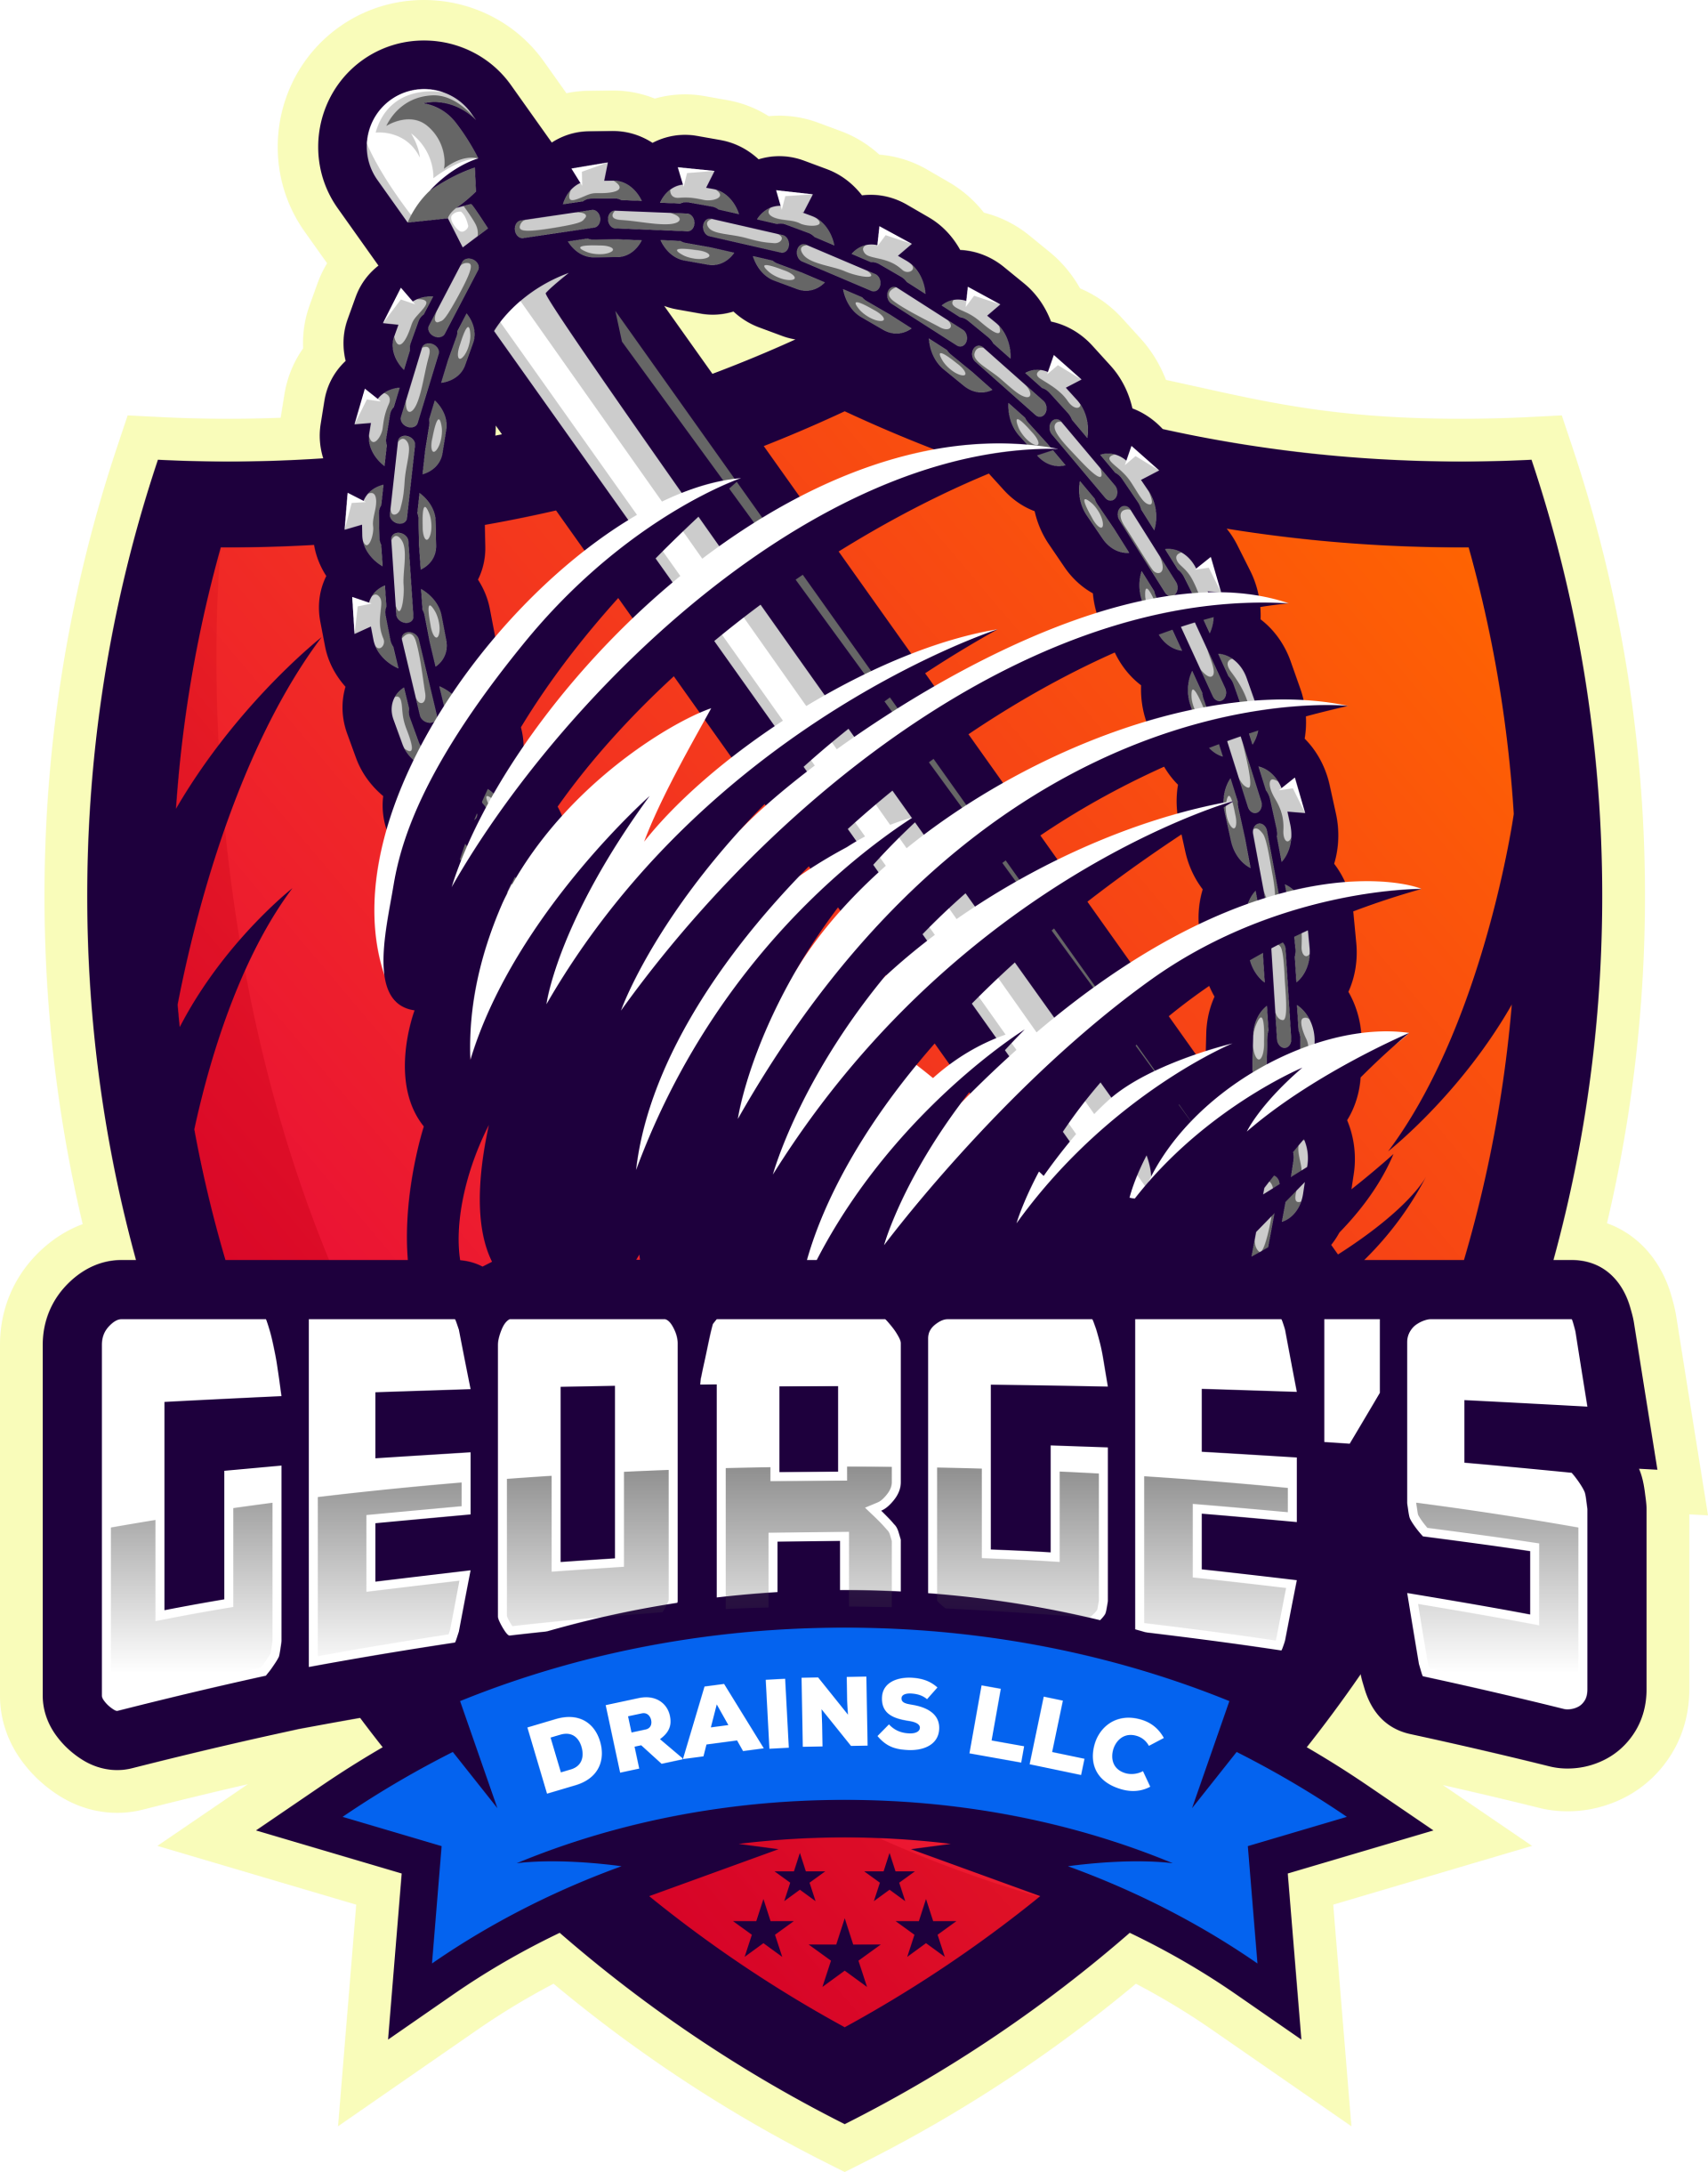 George’s Drains LLC